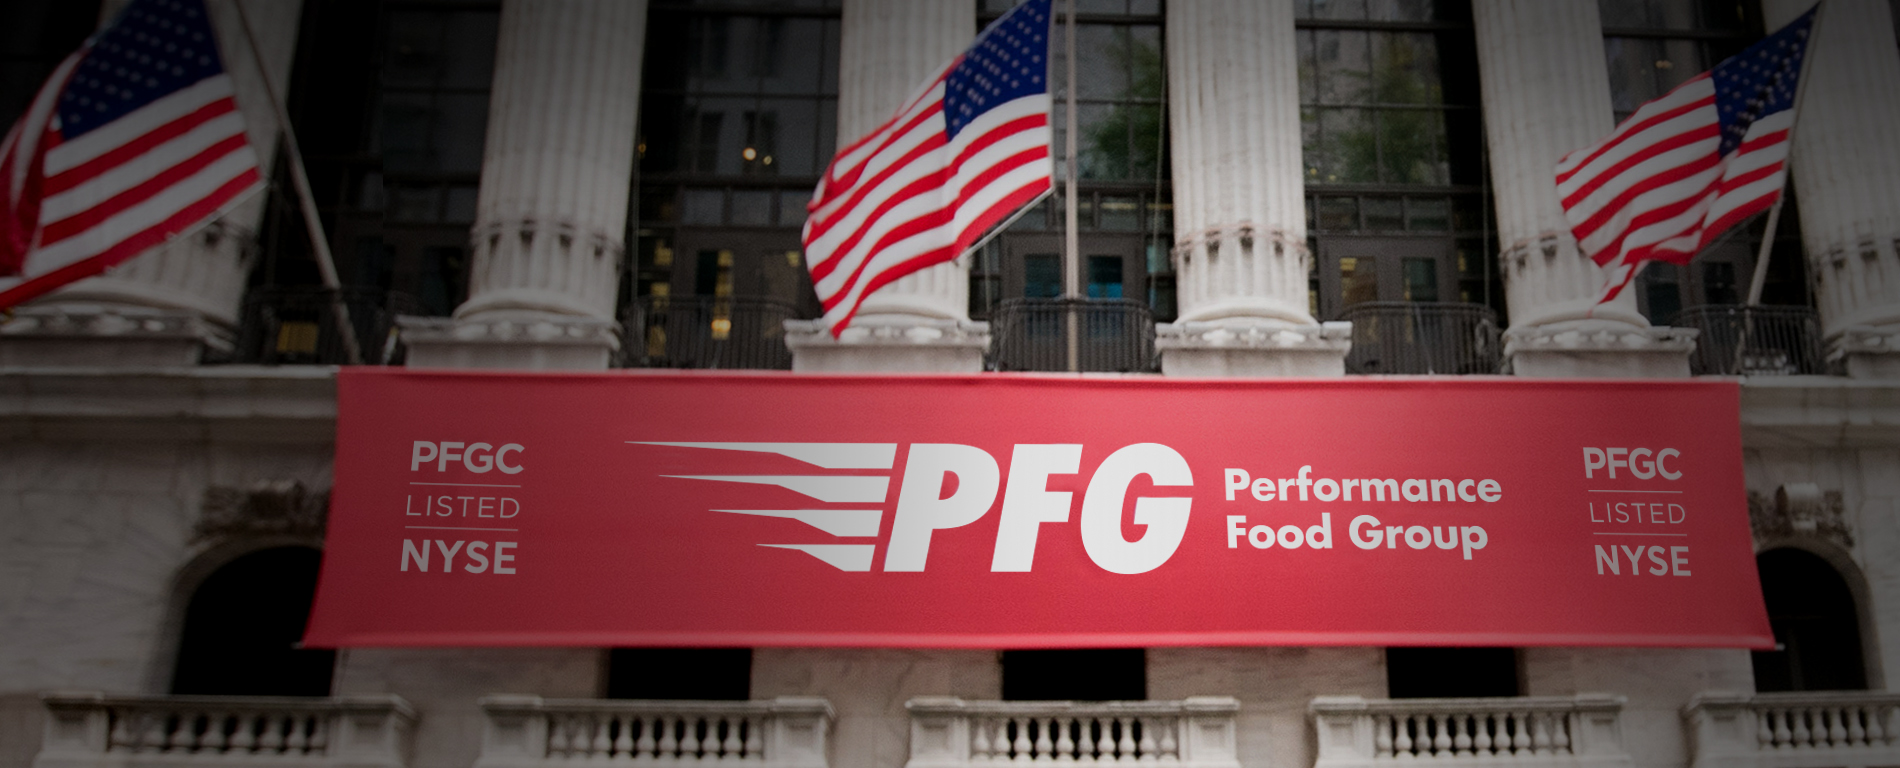 PFG Listed NYSE